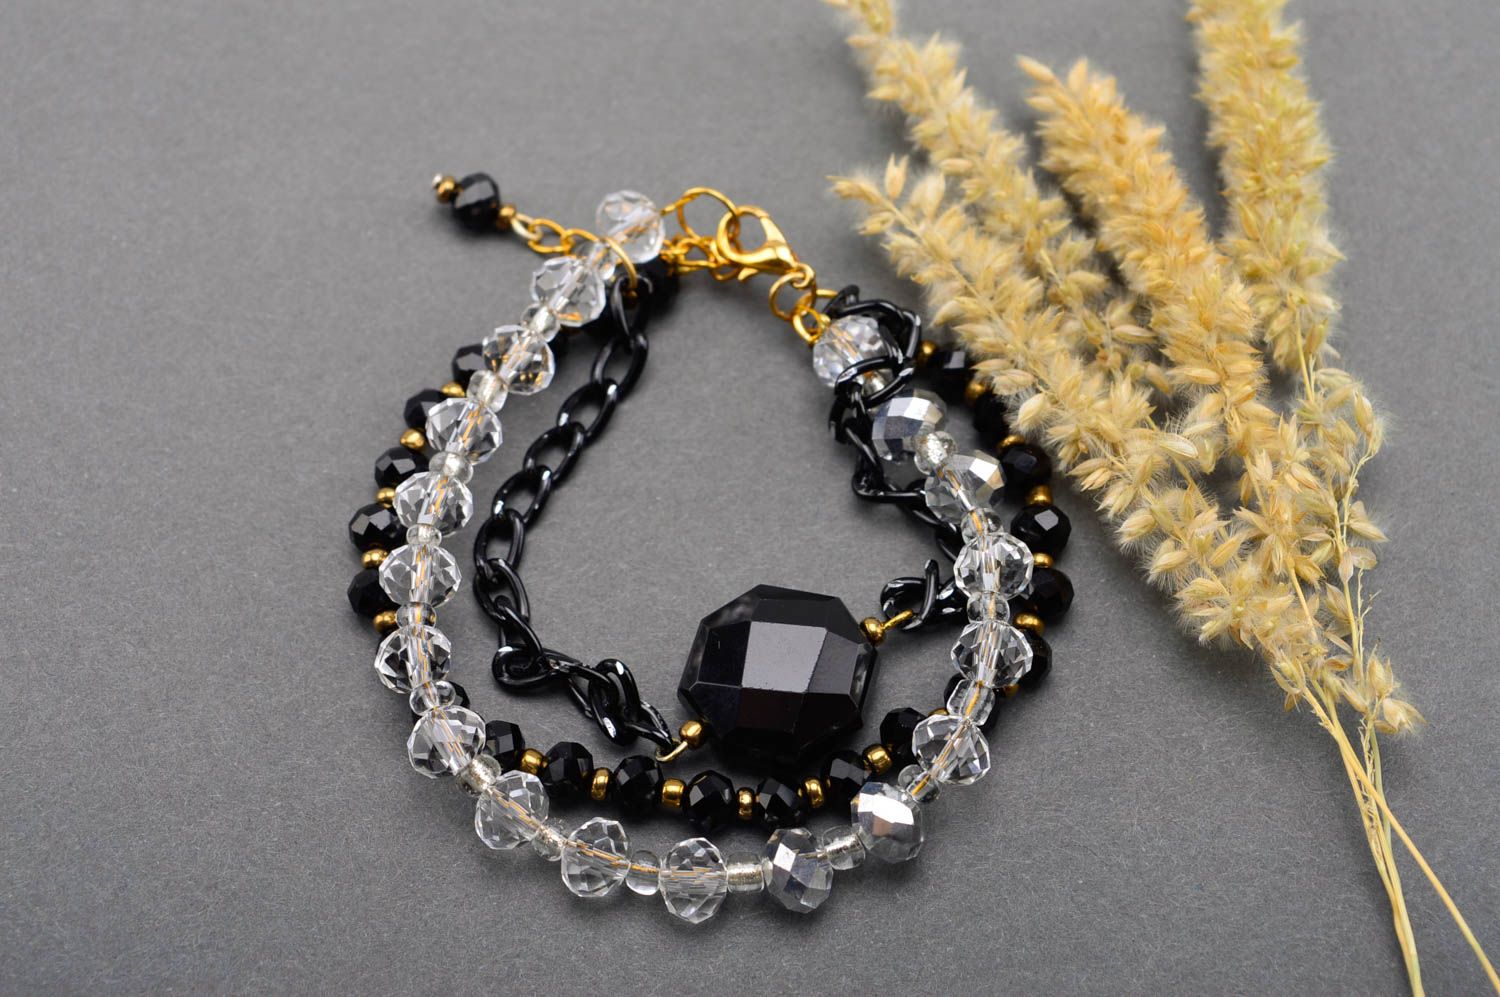 Handmade black and transparent beads bracelet on-chain for women photo 1